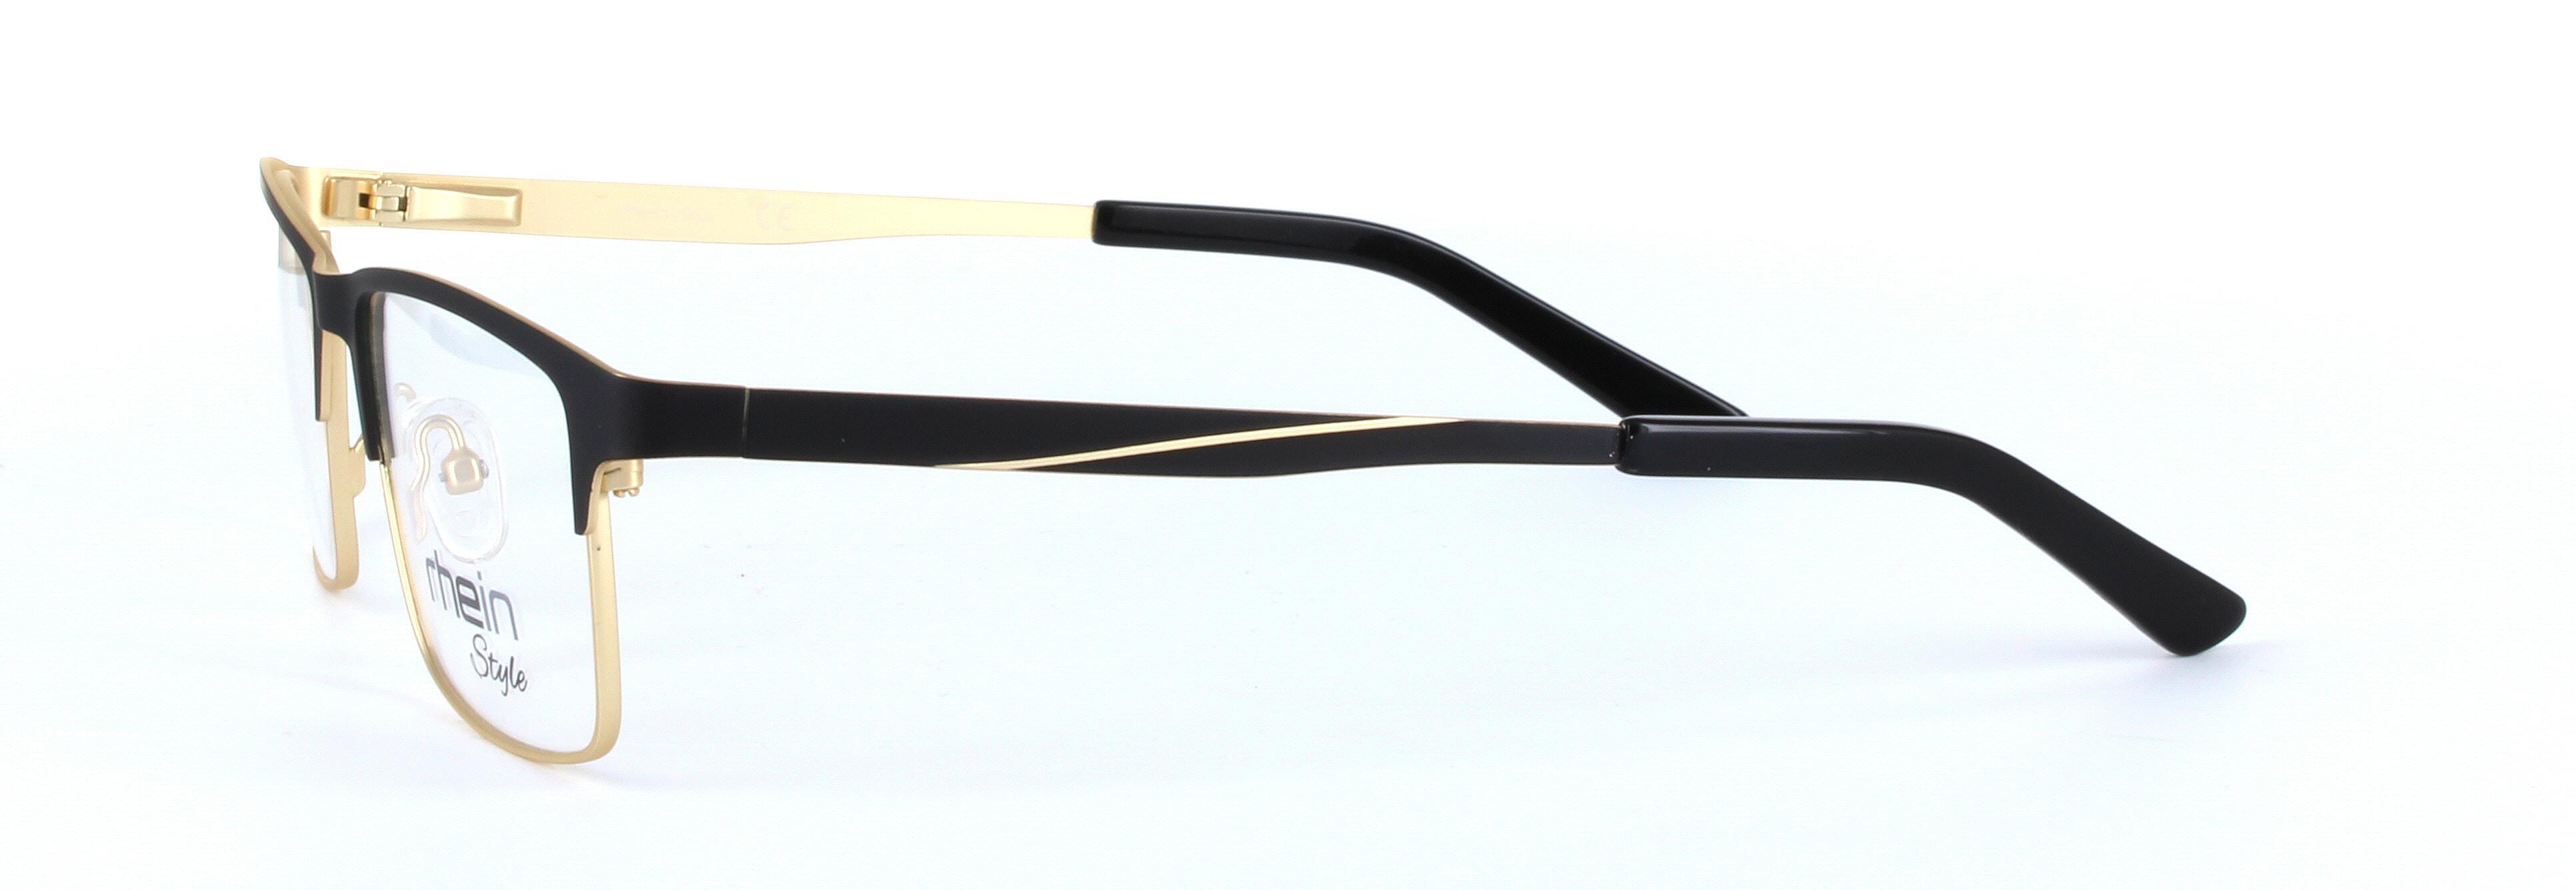 Codey Black Full Rim Oval Rectangular Metal Glasses - Image View 2